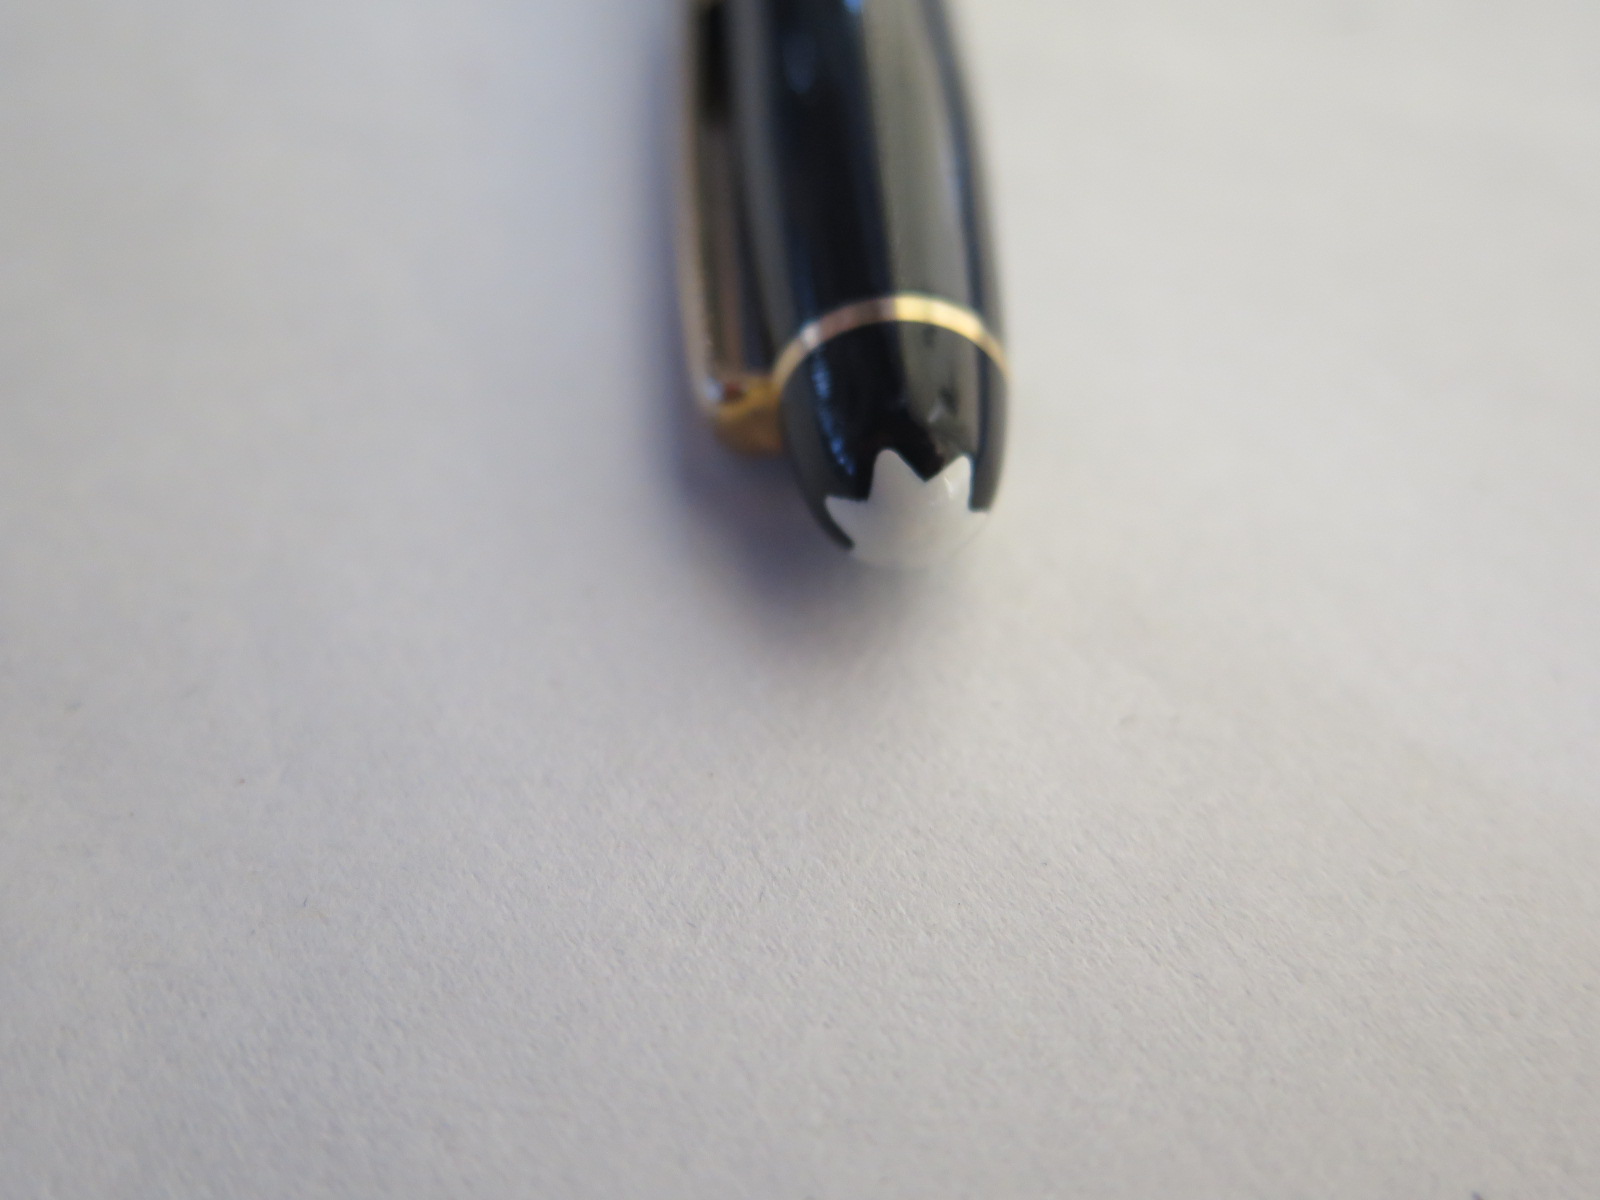 A Mont Blanc ballpoint pen, no box - working, minor usage wear - Image 2 of 2